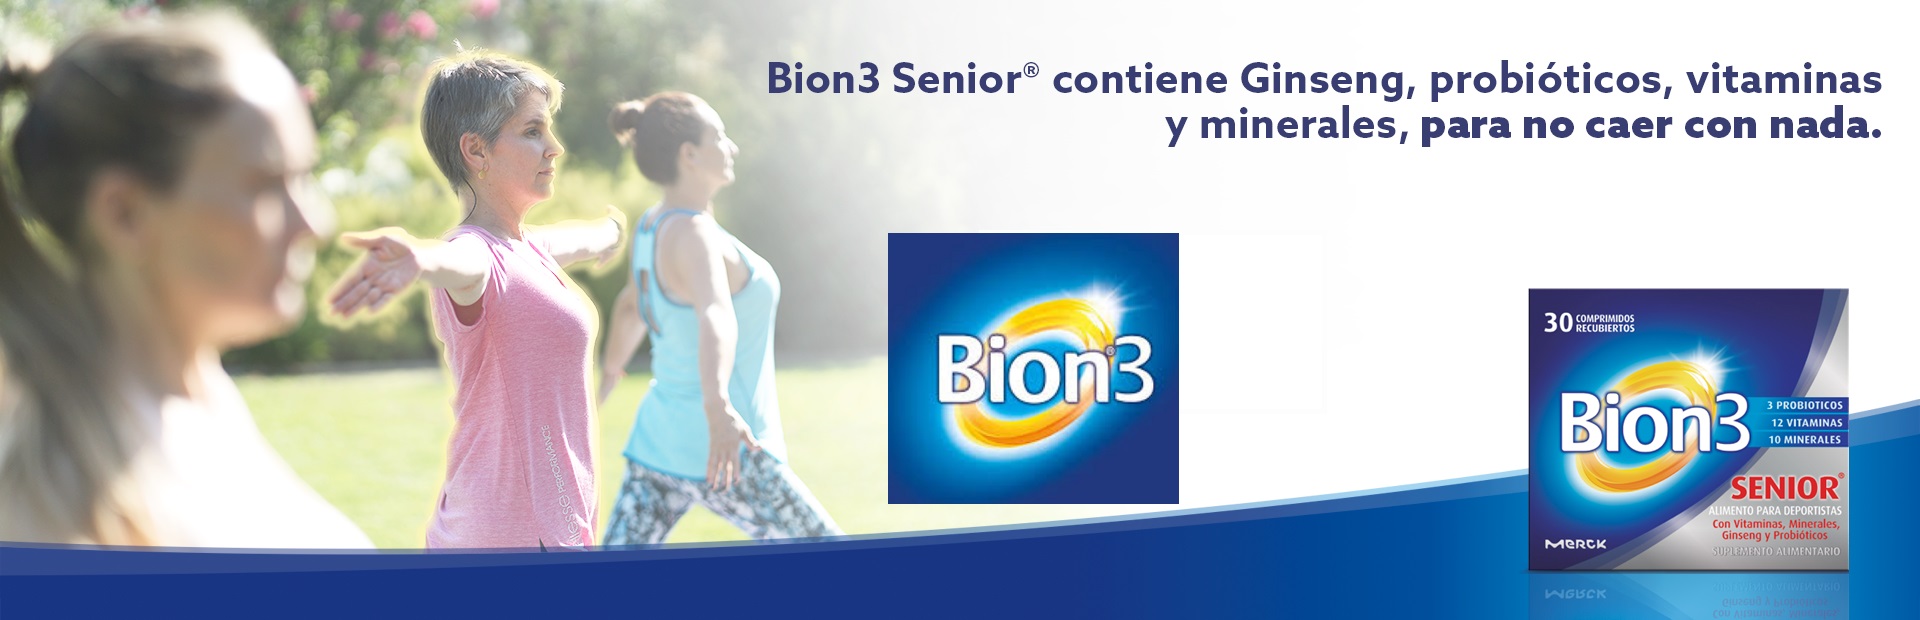 Bion3 Senior Food Supplement